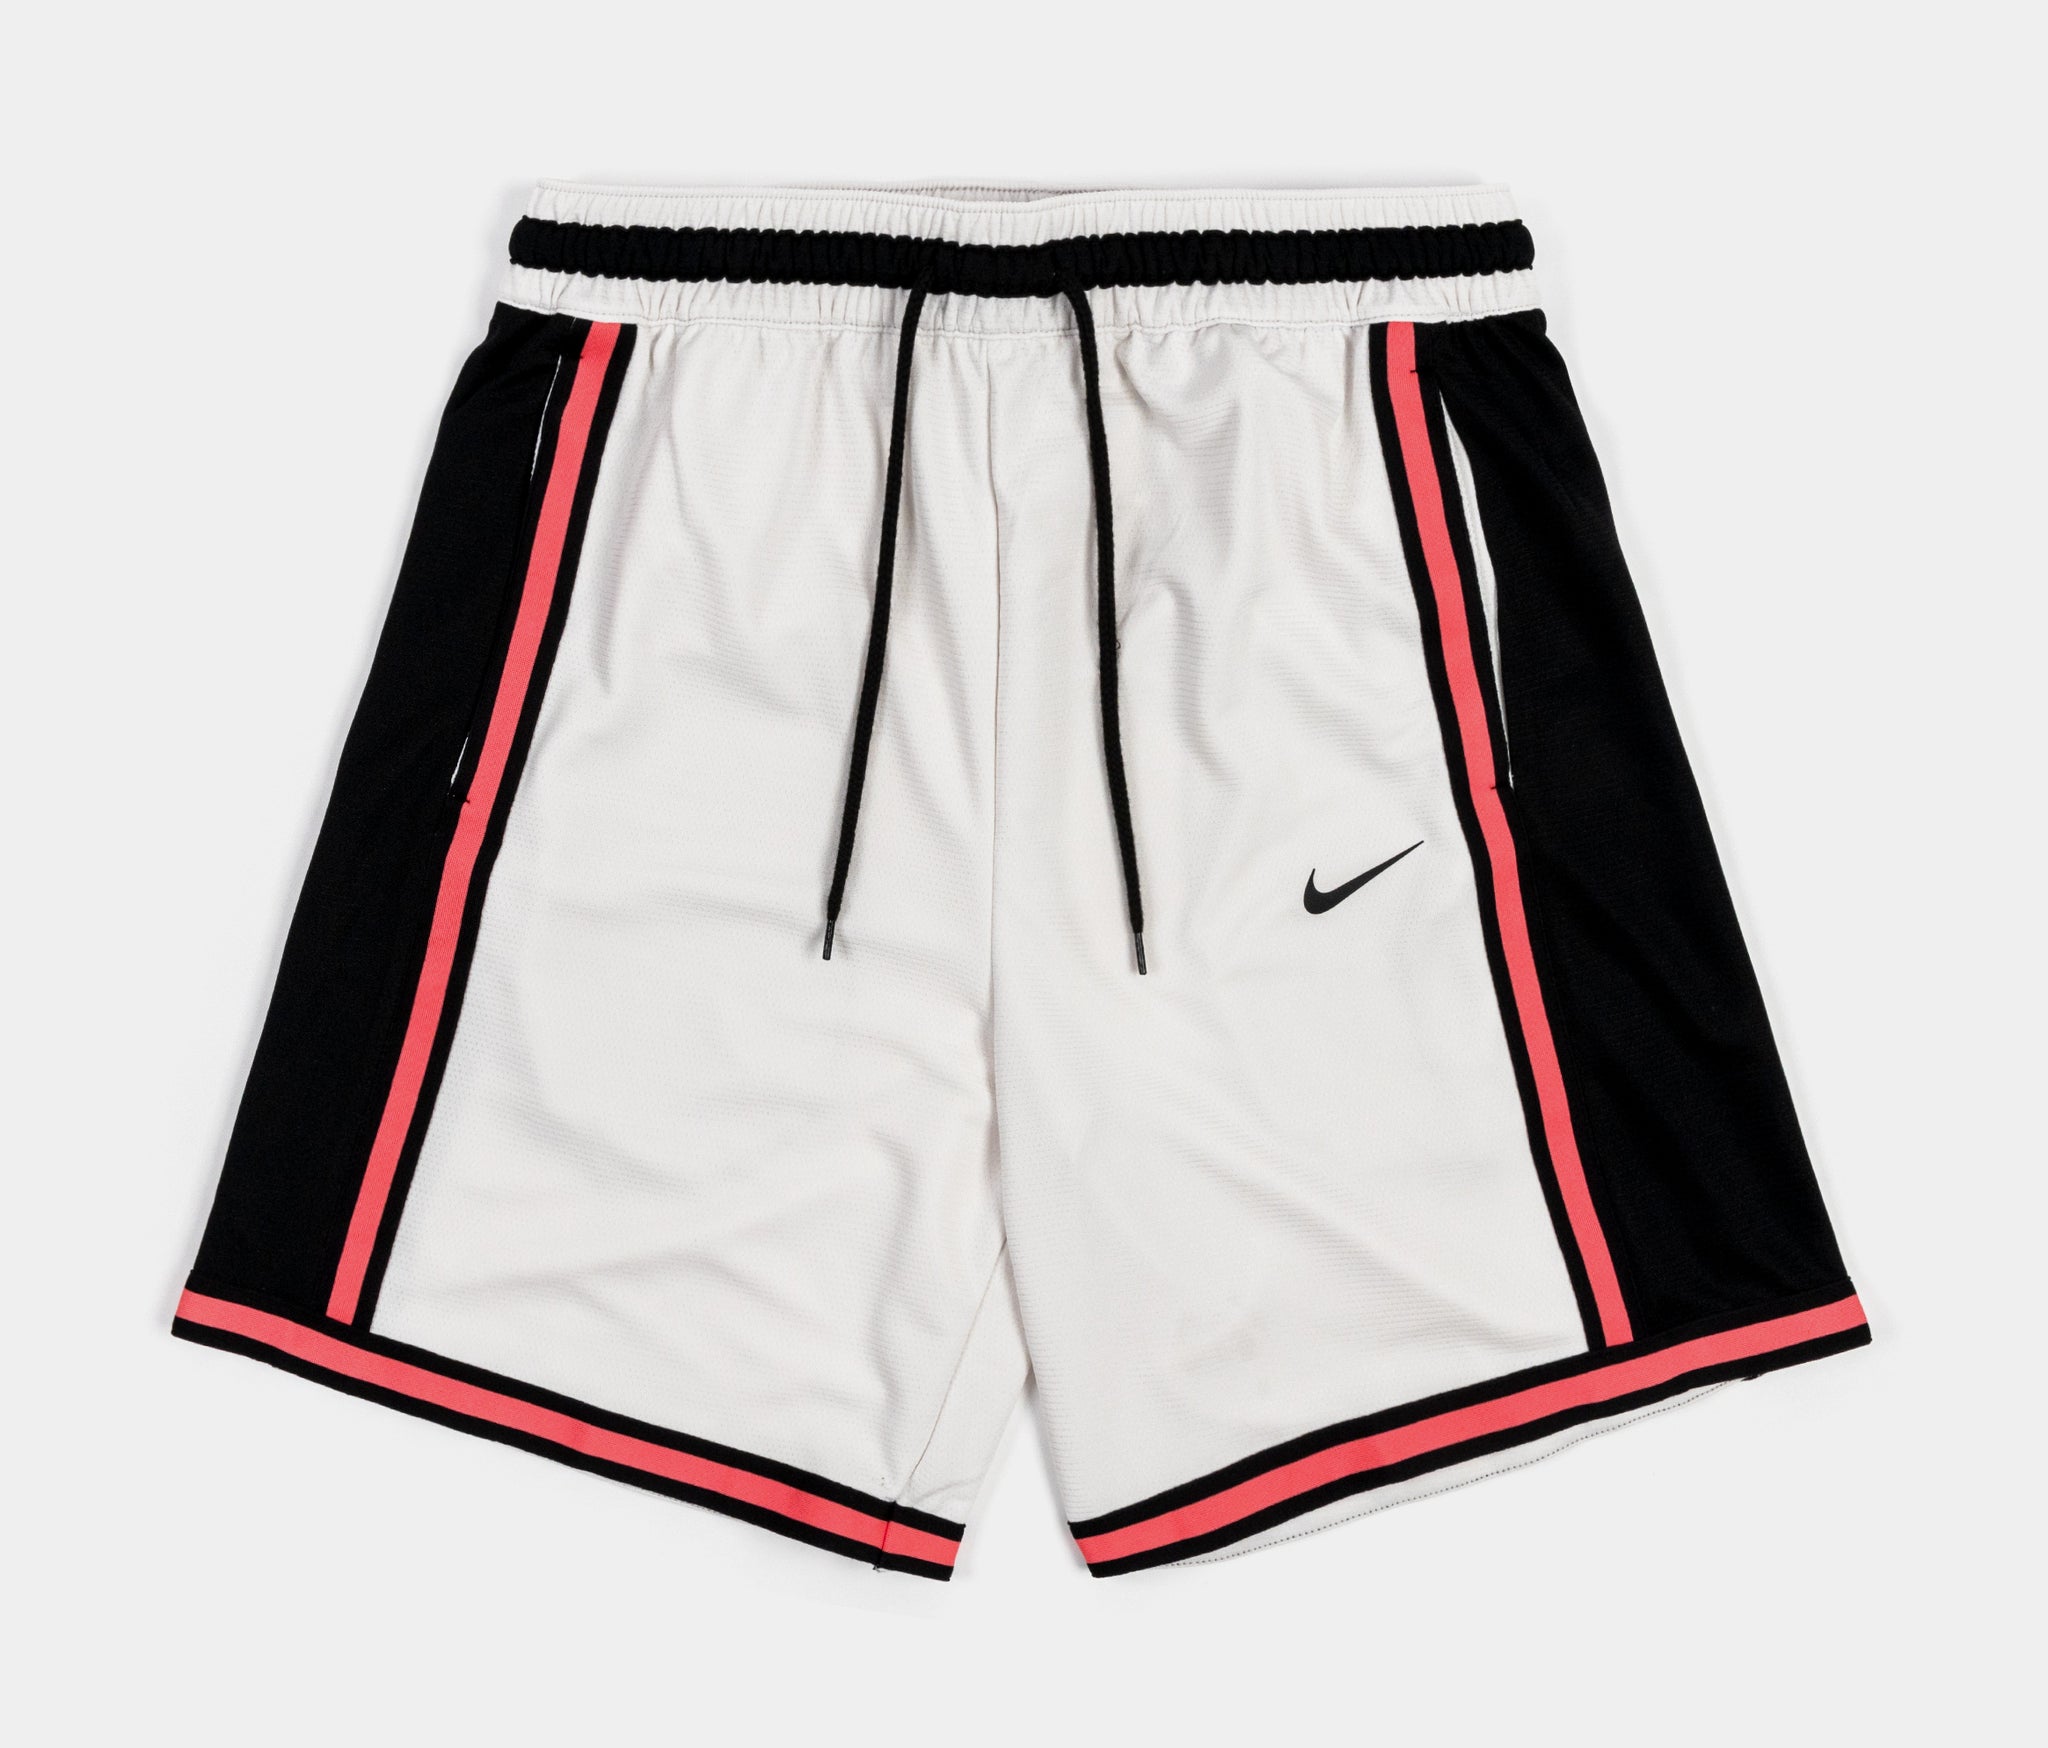 Nike Men's Dri-Fit DNA Basketball Shorts Black